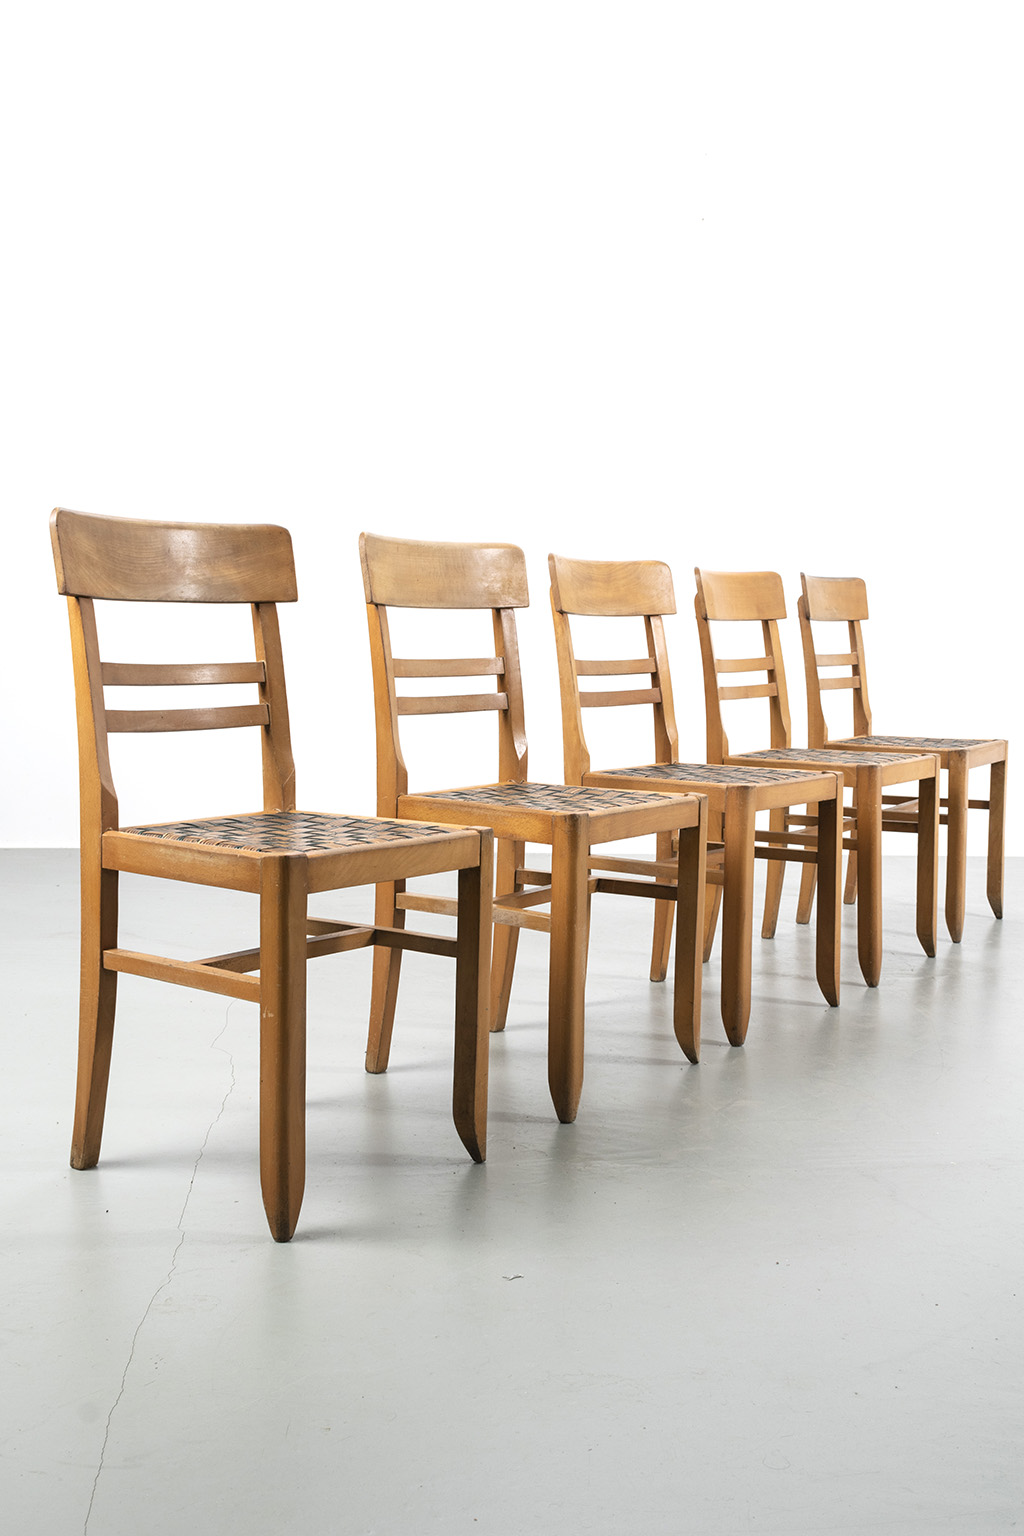 Set van 5 houten café stoelen